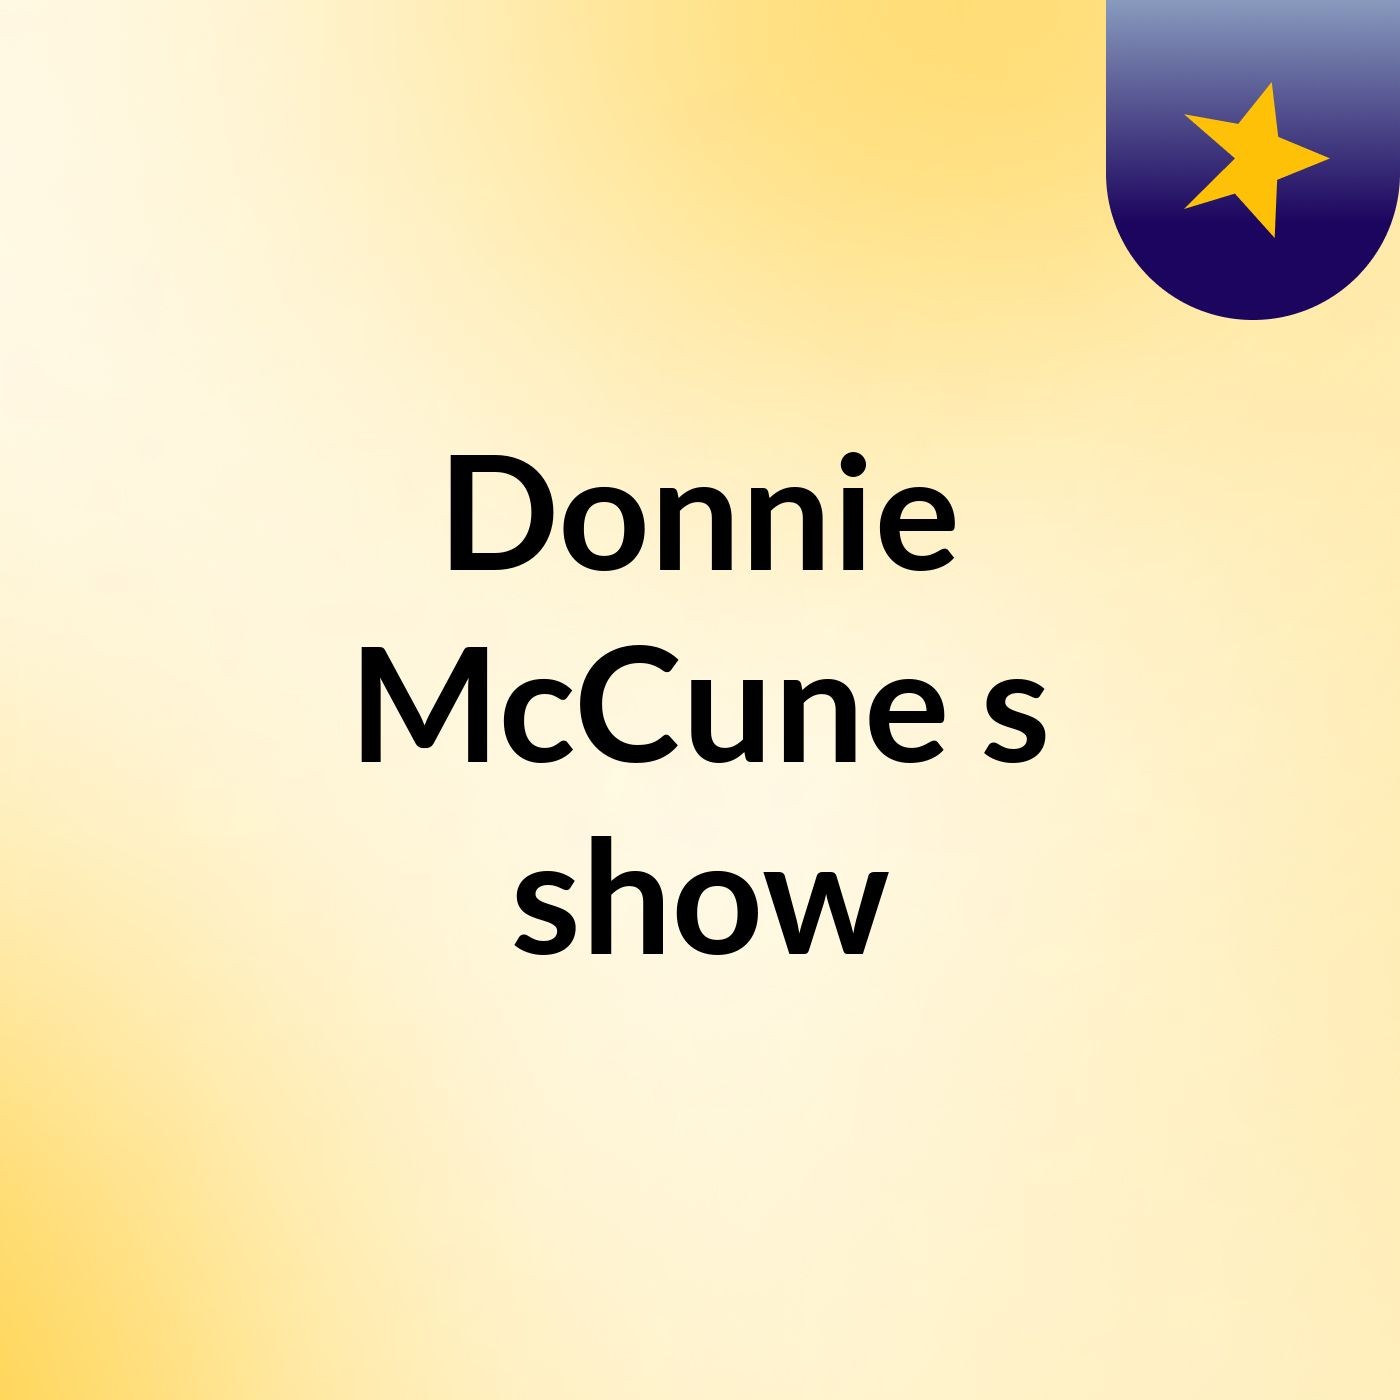 Episode 3 - Donnie McCune's show